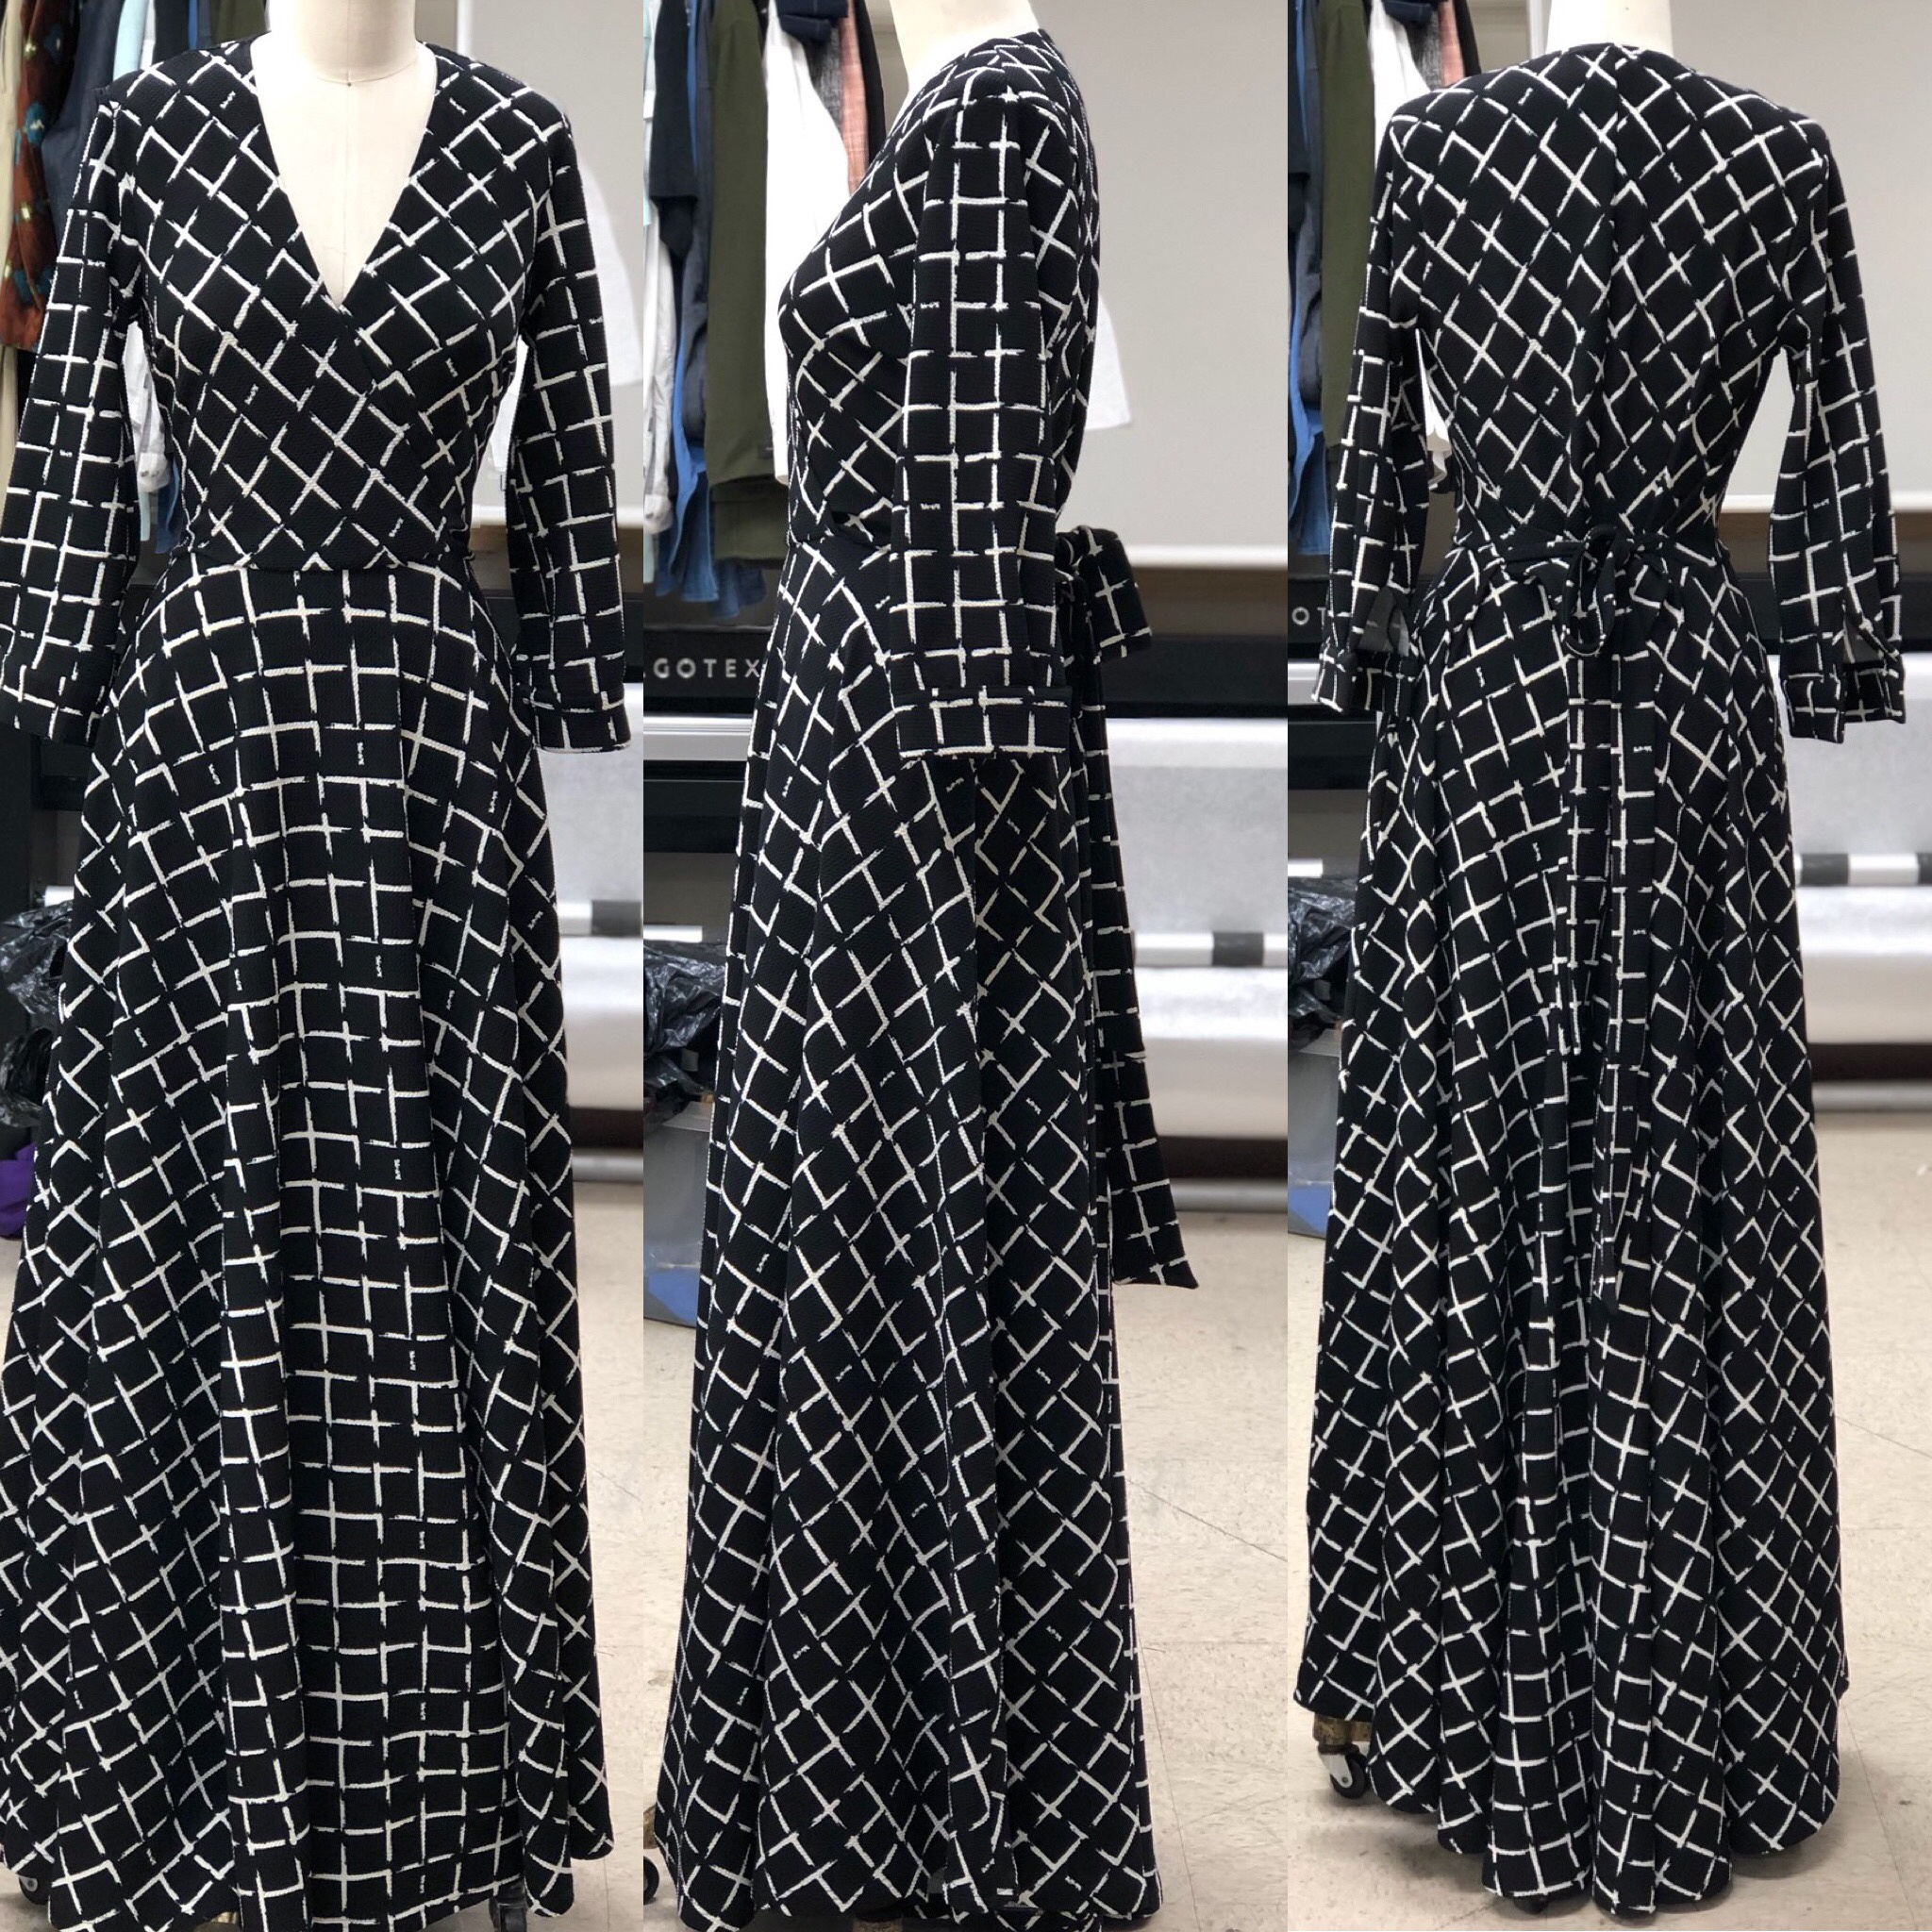 "2019" Spring/Summer Dress Collection "Victoria Dress" fresh off the machine.